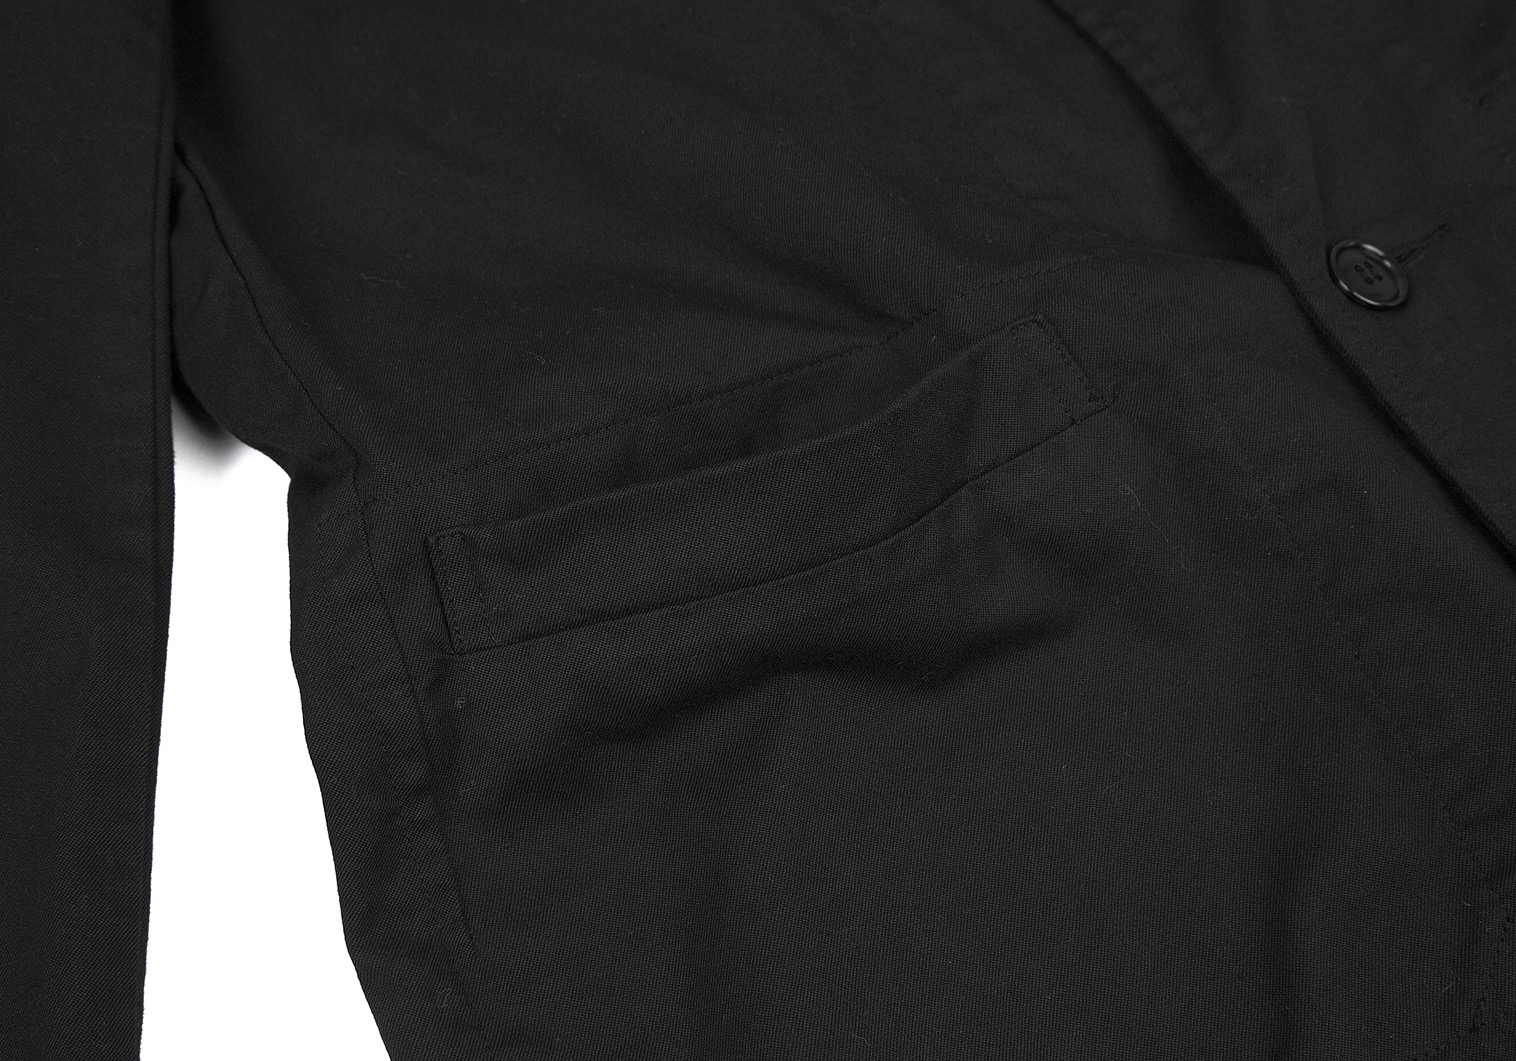 HERMES エルメス カジュアルシャツ 52(XL位) 黒xグレーx茶等